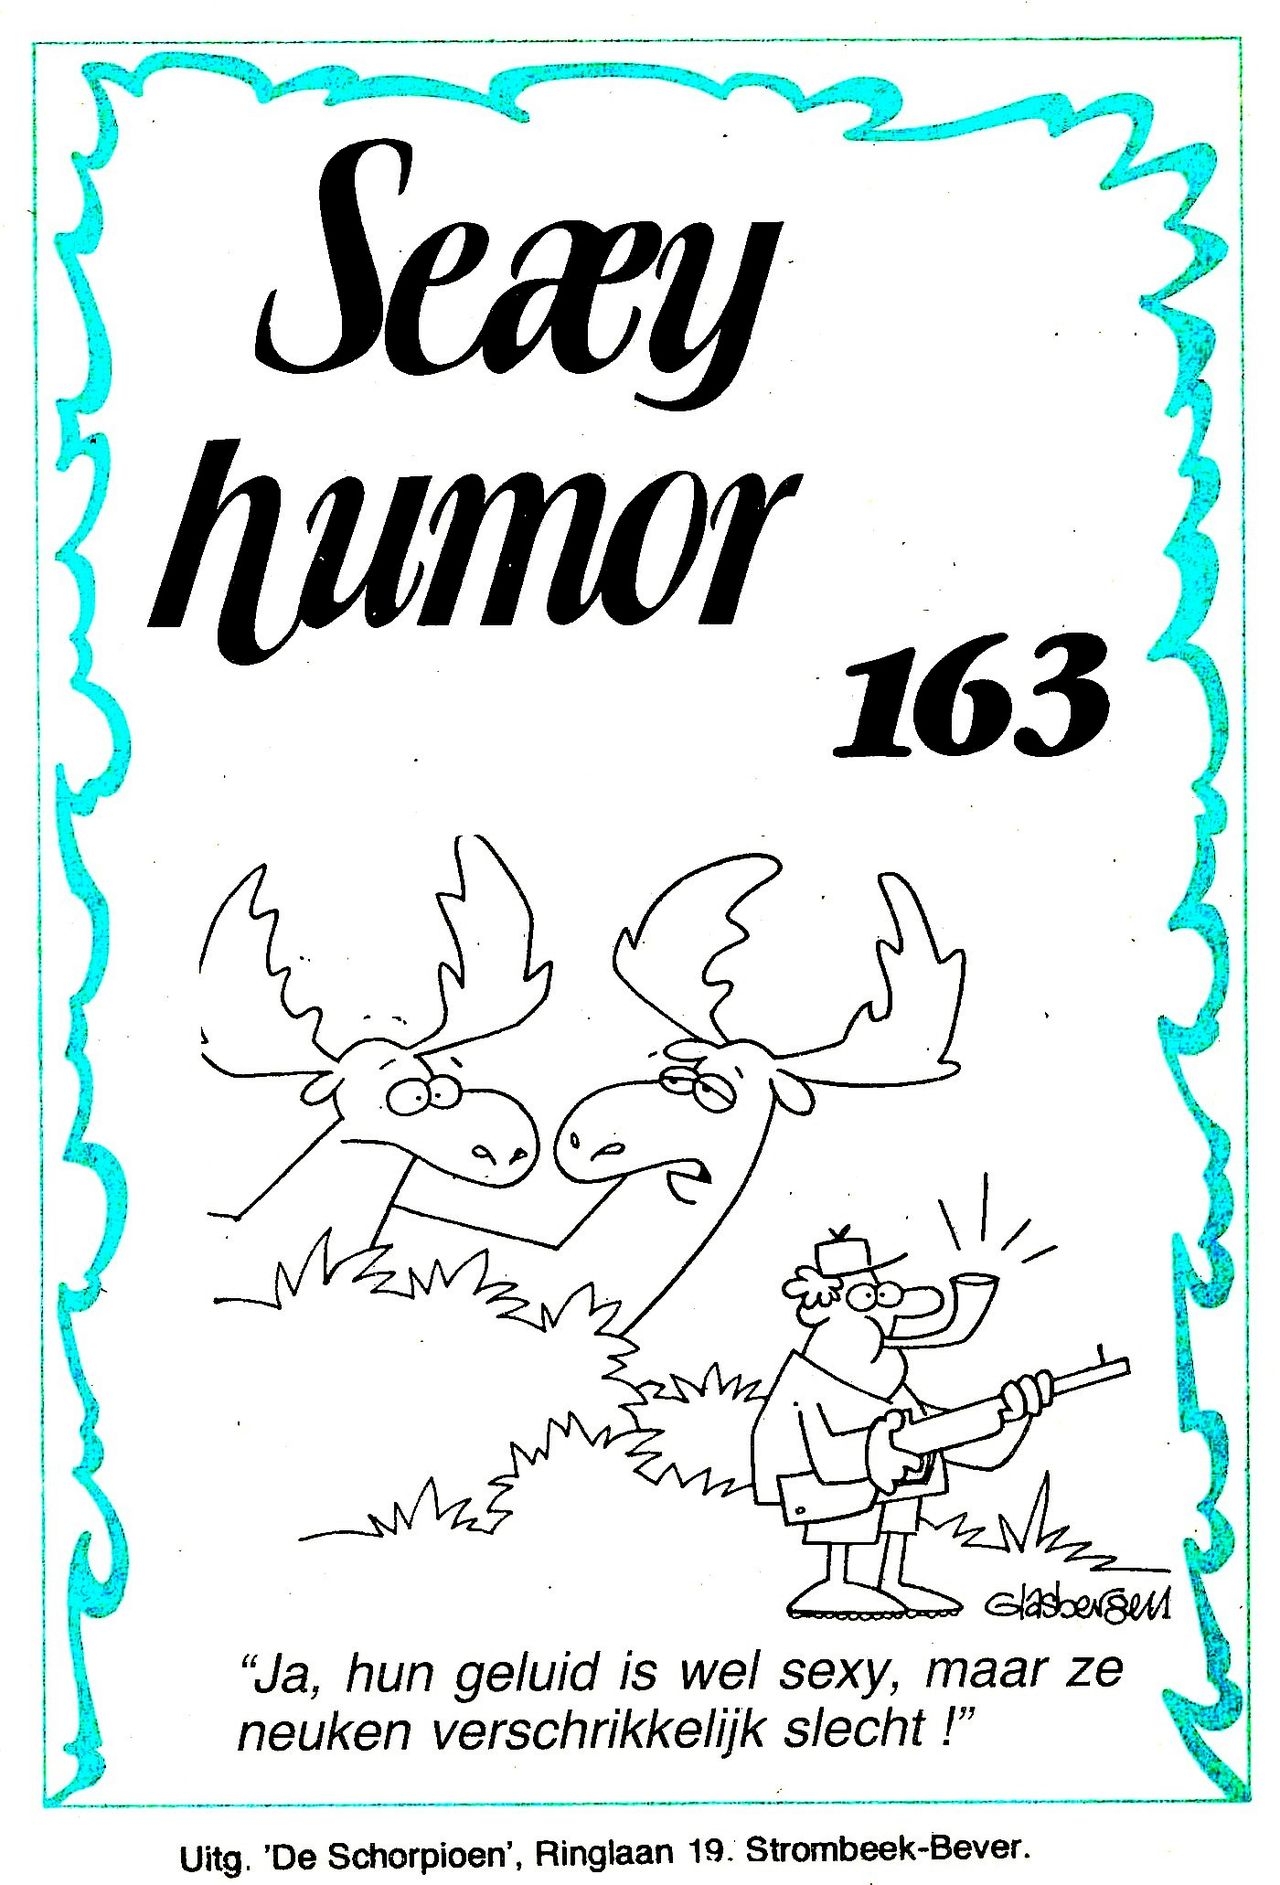 Sexy Humor 163 (Dutch) 1